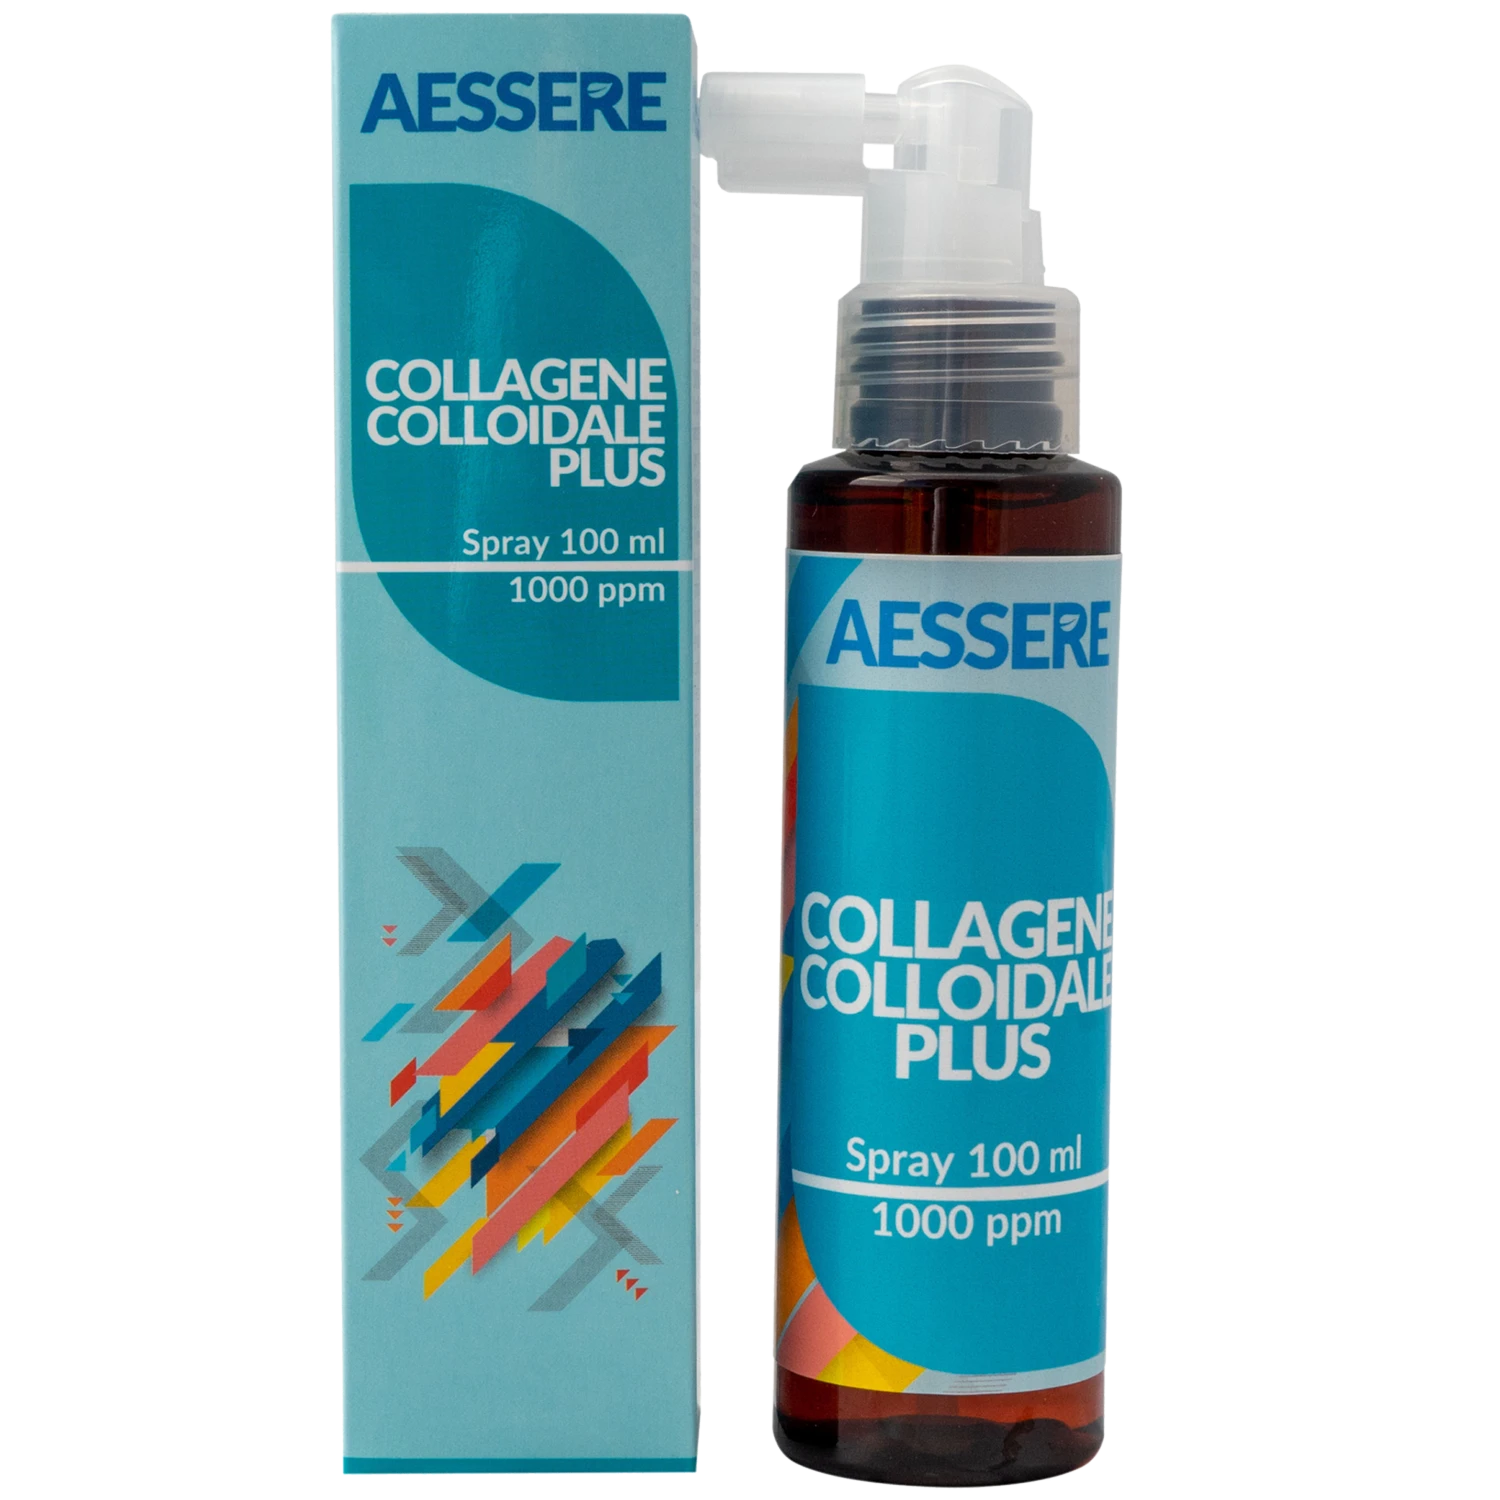 Collagene Colloidale Plus 1000 ppm 100 ml